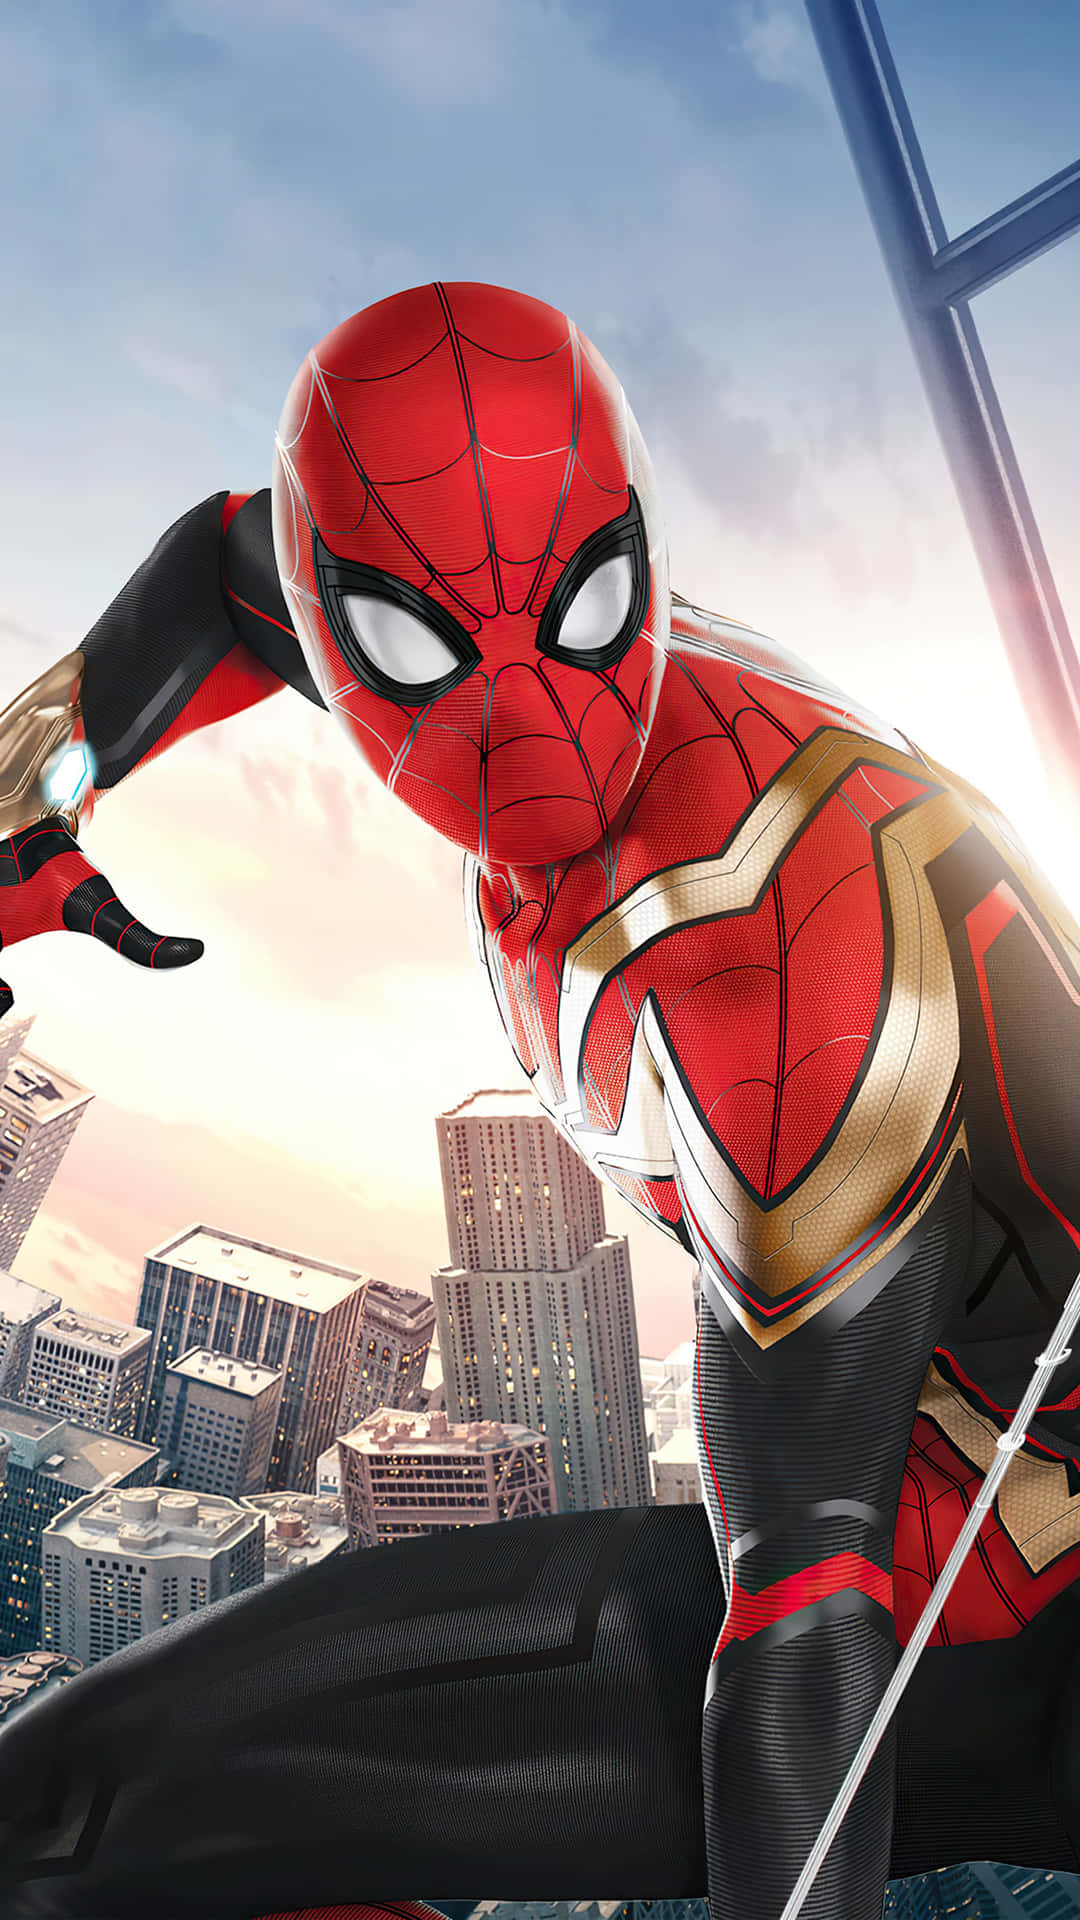 Spiderman heroically swings through the city skyline